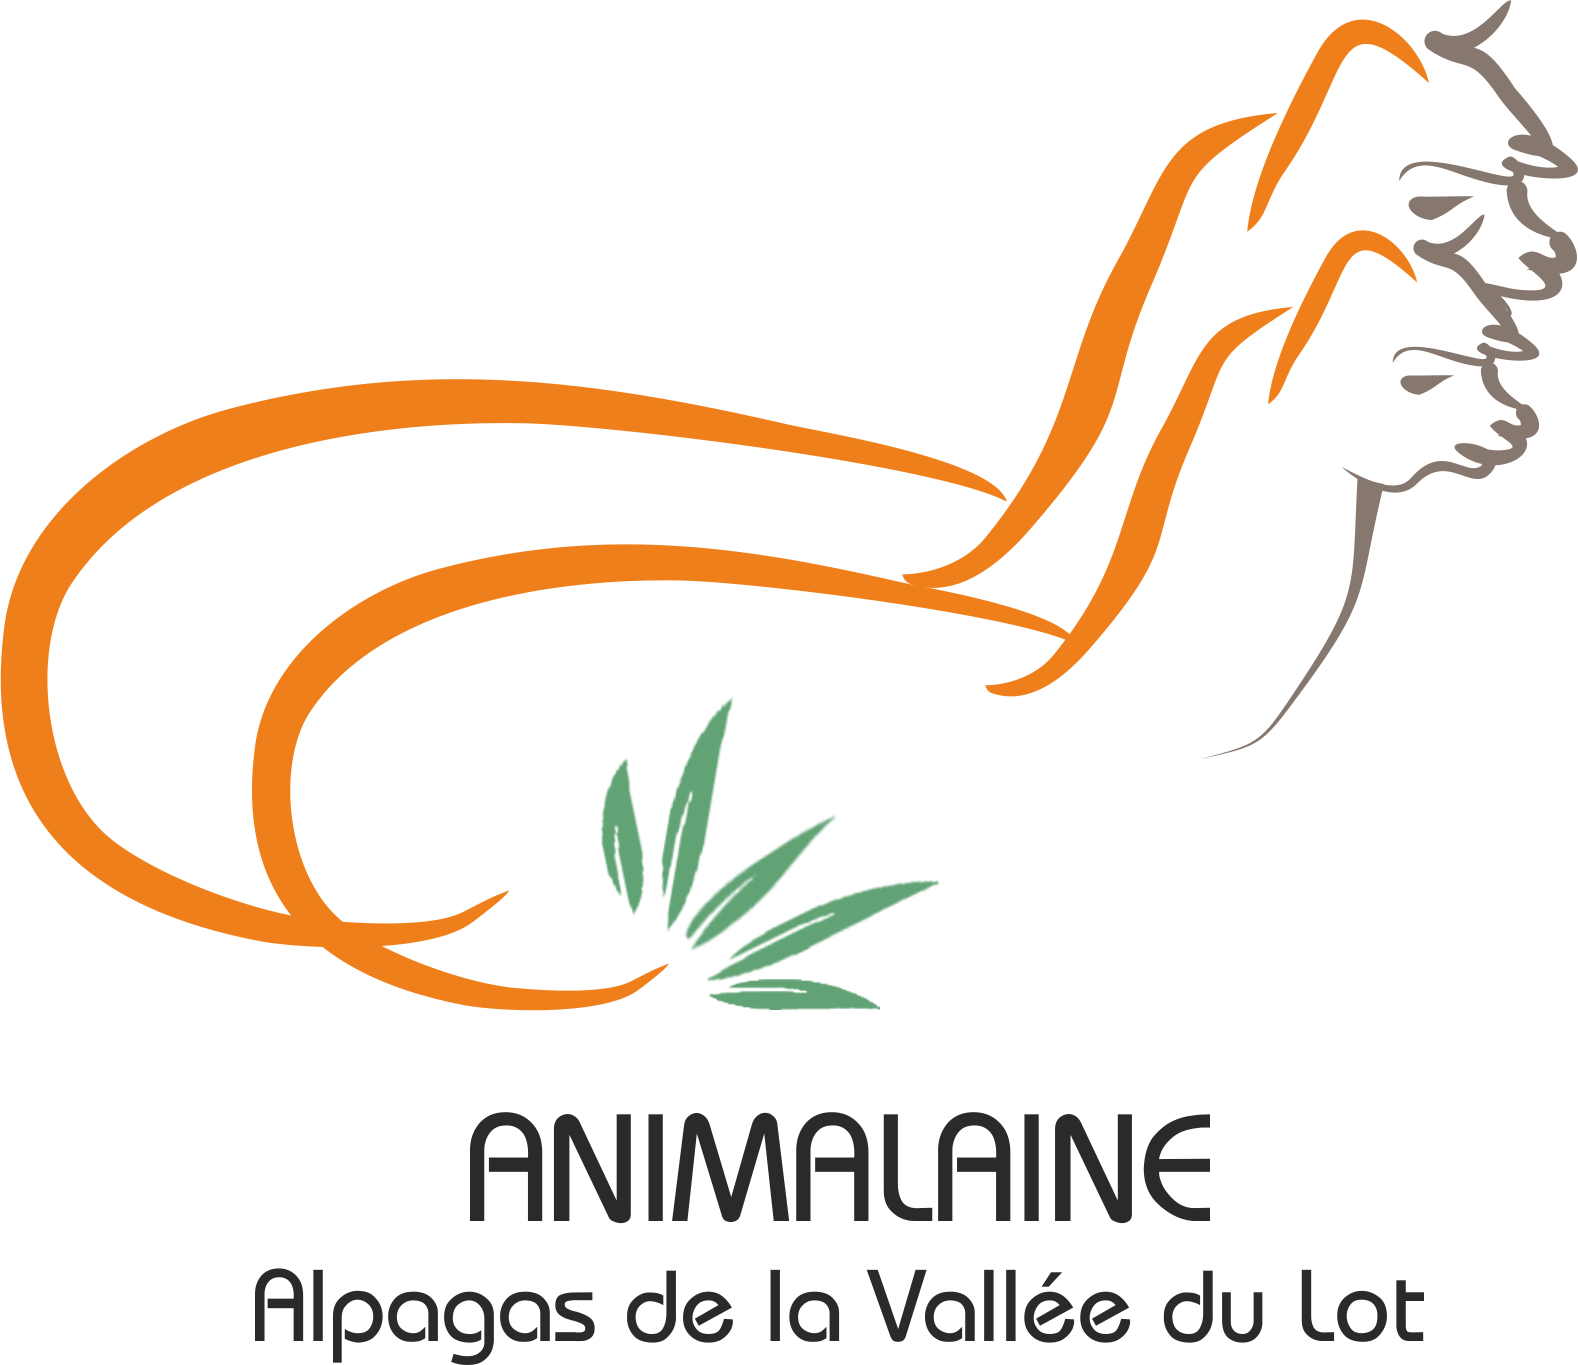 Animalaine – alpagas de la vallée du Lot